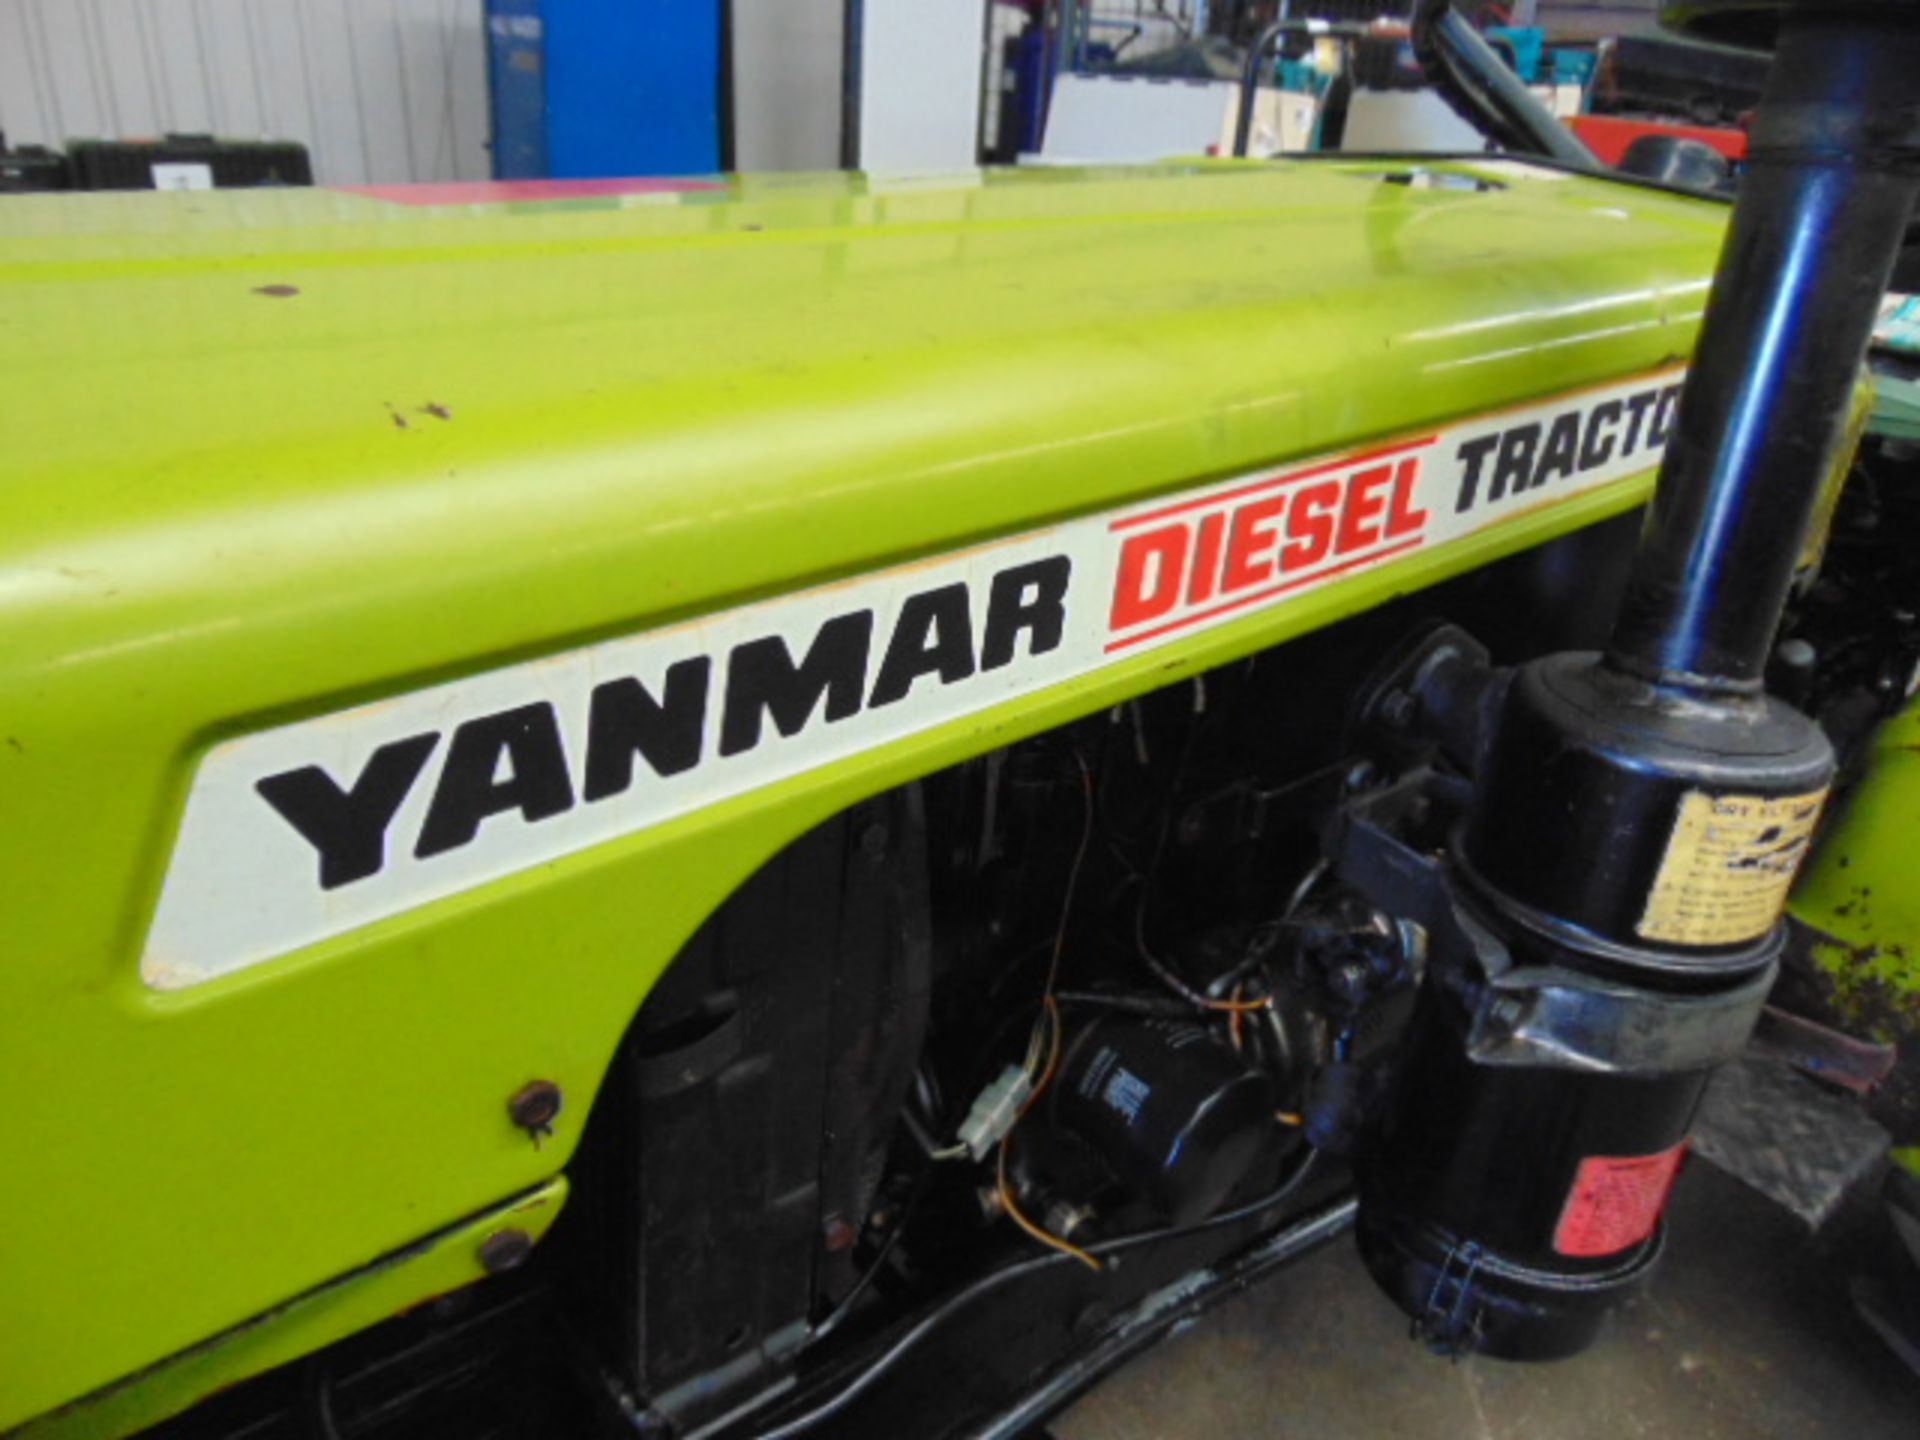 Yanmar 4x4 Compact Diesel Tractor - Image 9 of 15